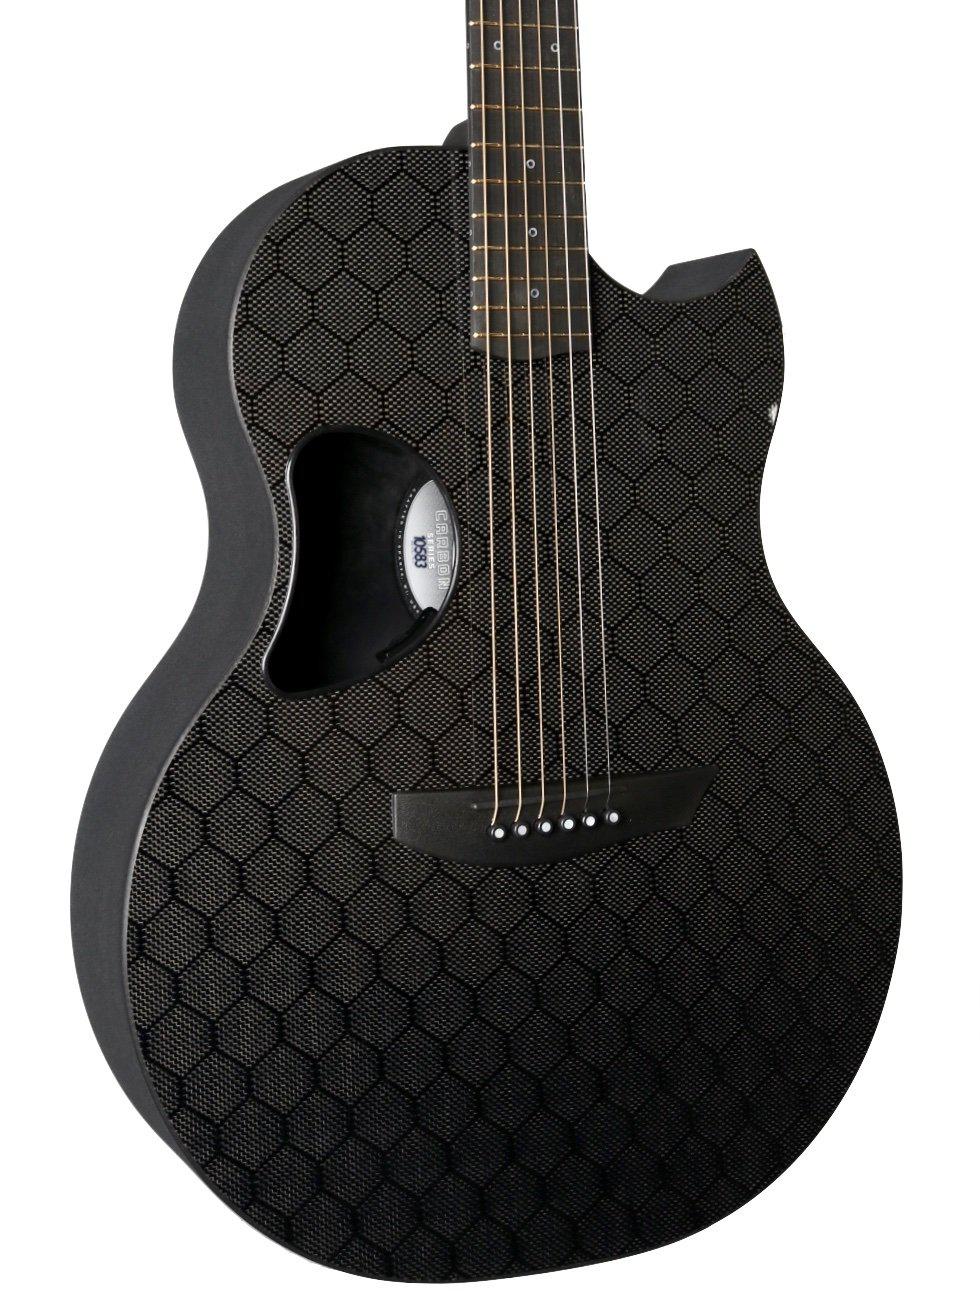 McPherson Sable Honeycomb Finish Gold Hardware with LR Baggs Anthem SL in Black #11101 - McPherson Guitars - Heartbreaker Guitars